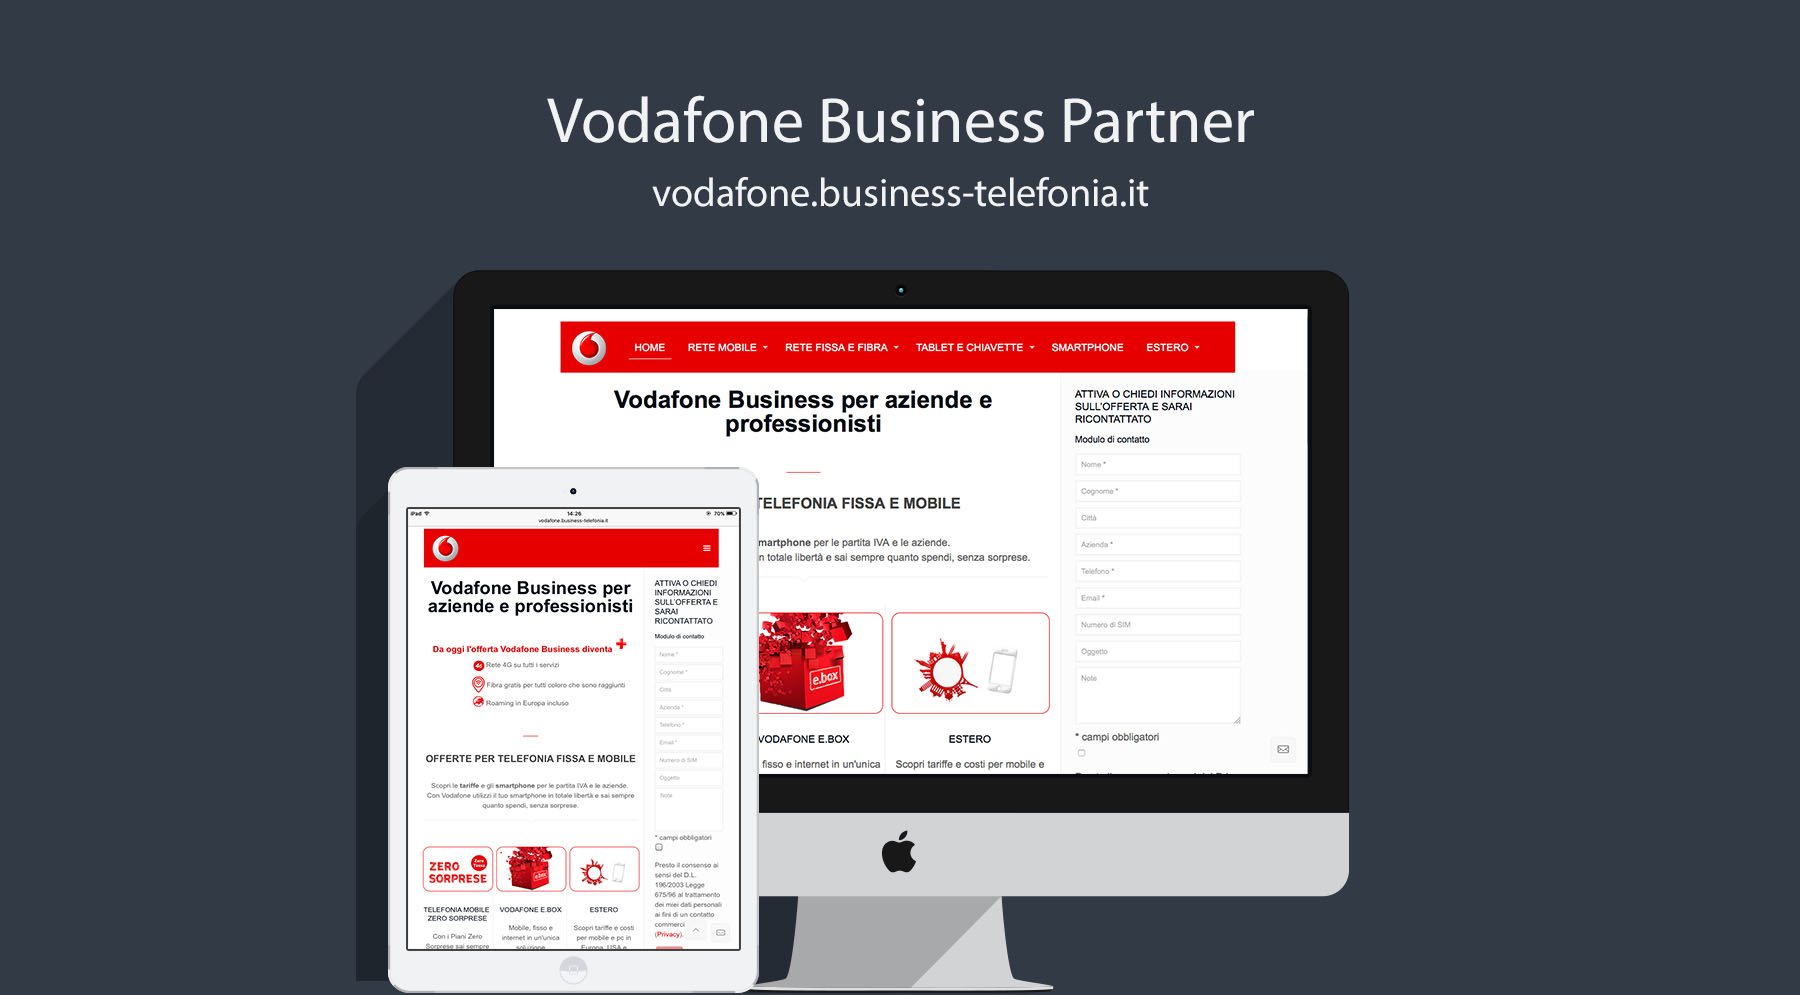 Vodafone business partner